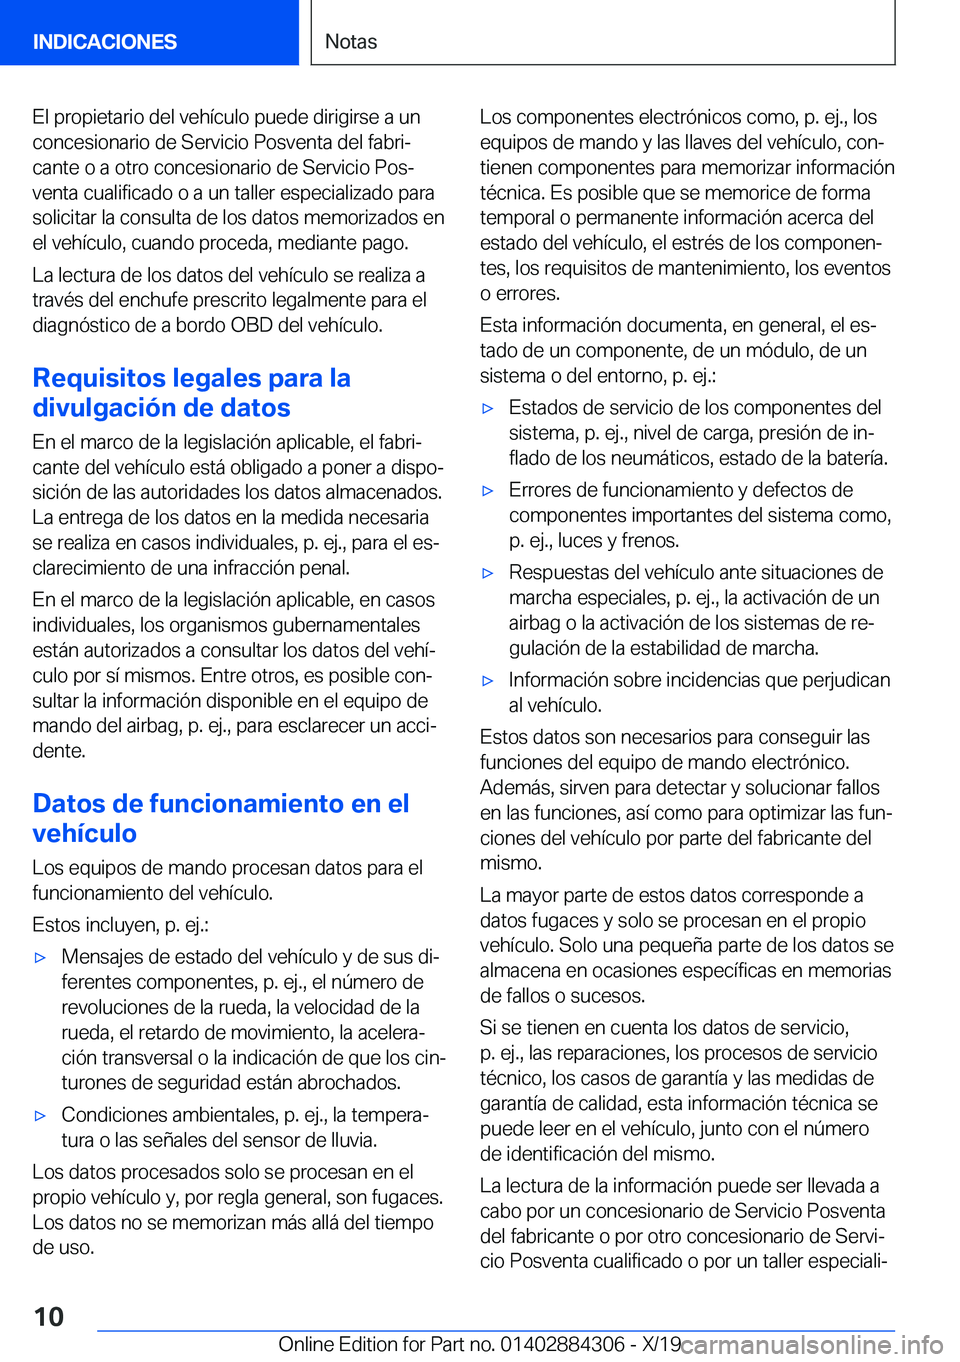 BMW 8 SERIES GRAN COUPE 2020  Manuales de Empleo (in Spanish) �E�l��p�r�o�p�i�e�t�a�r�i�o��d�e�l��v�e�h�